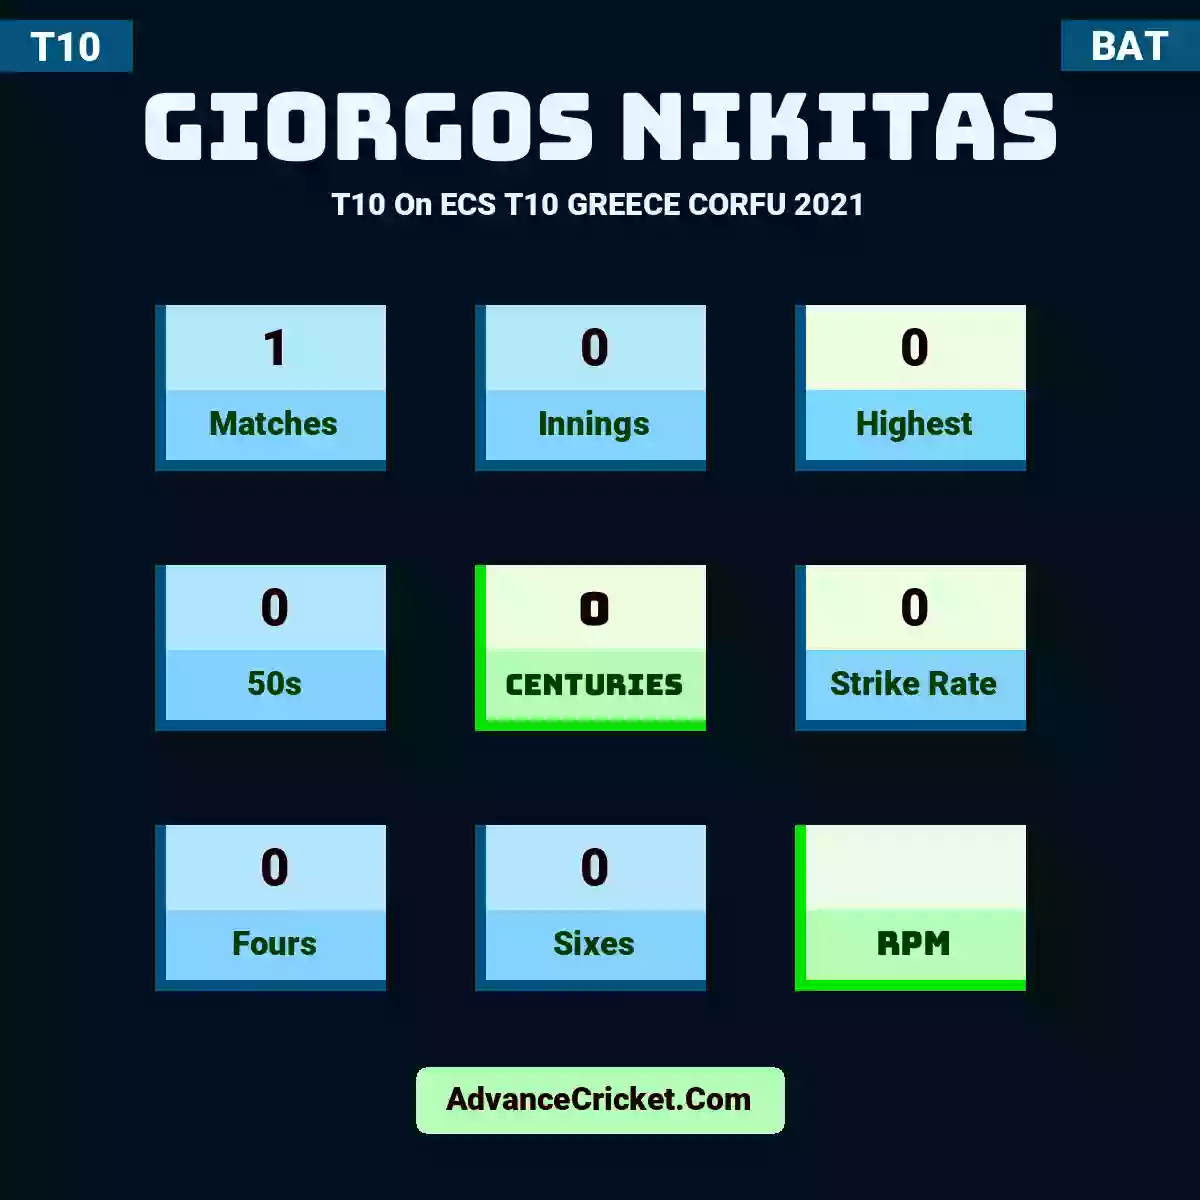 Giorgos Nikitas T10  On ECS T10 GREECE CORFU 2021, Giorgos Nikitas played 1 matches, scored 0 runs as highest, 0 half-centuries, and 0 centuries, with a strike rate of 0. G.Nikitas hit 0 fours and 0 sixes.